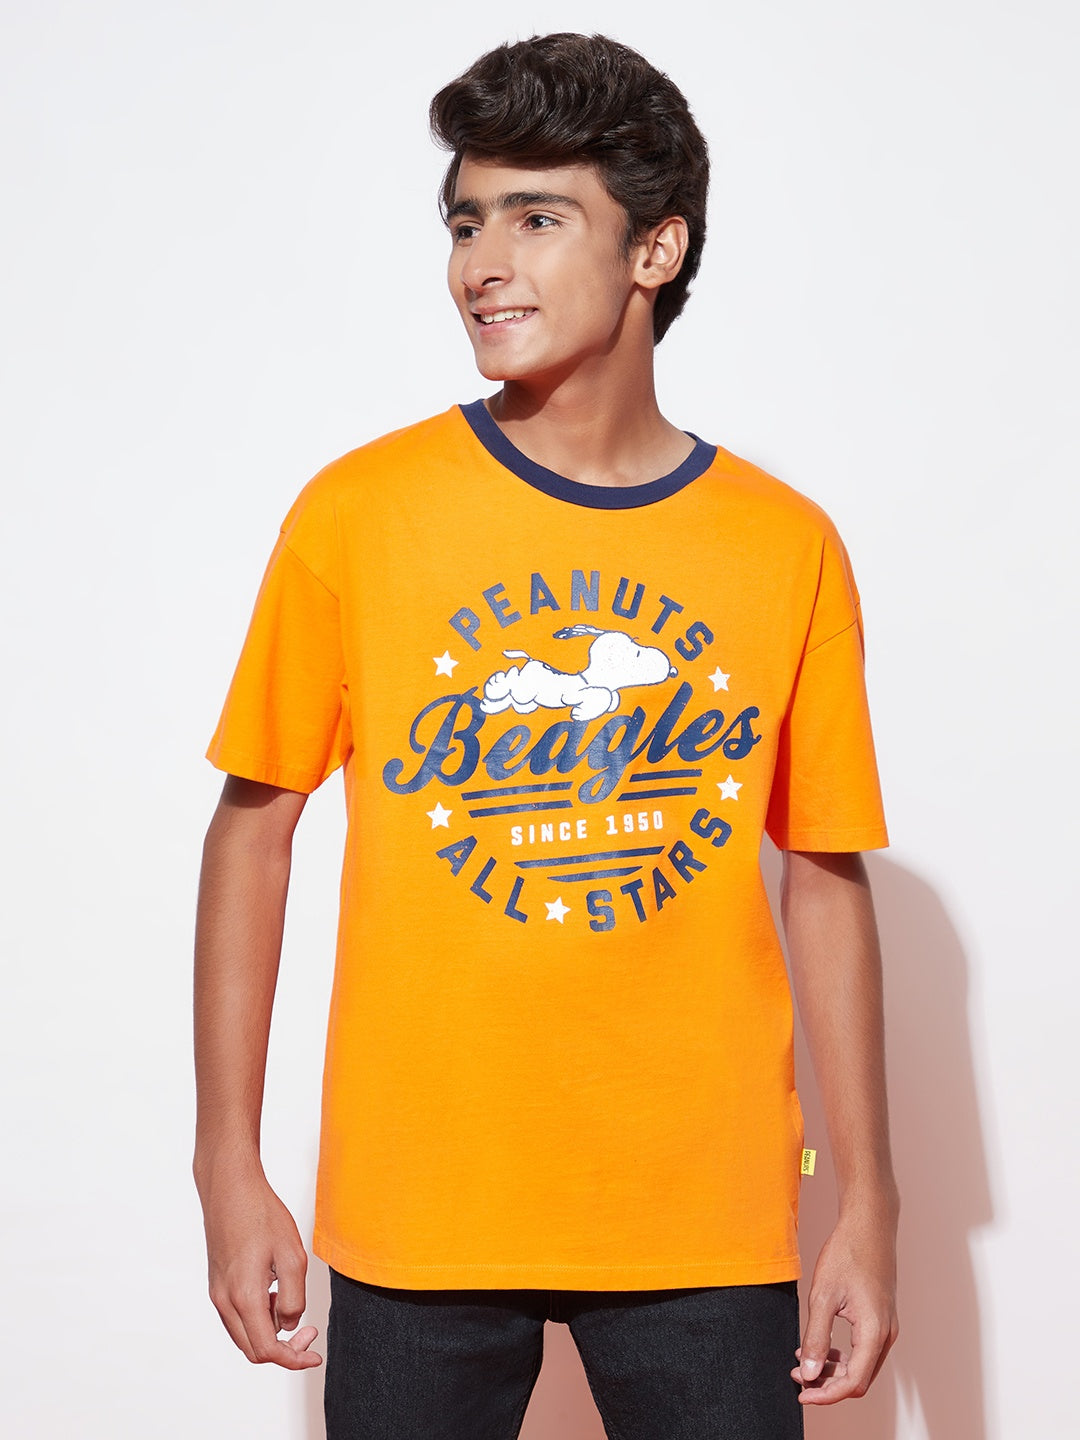 Peanut Beagles Orange Oversized T-shirt